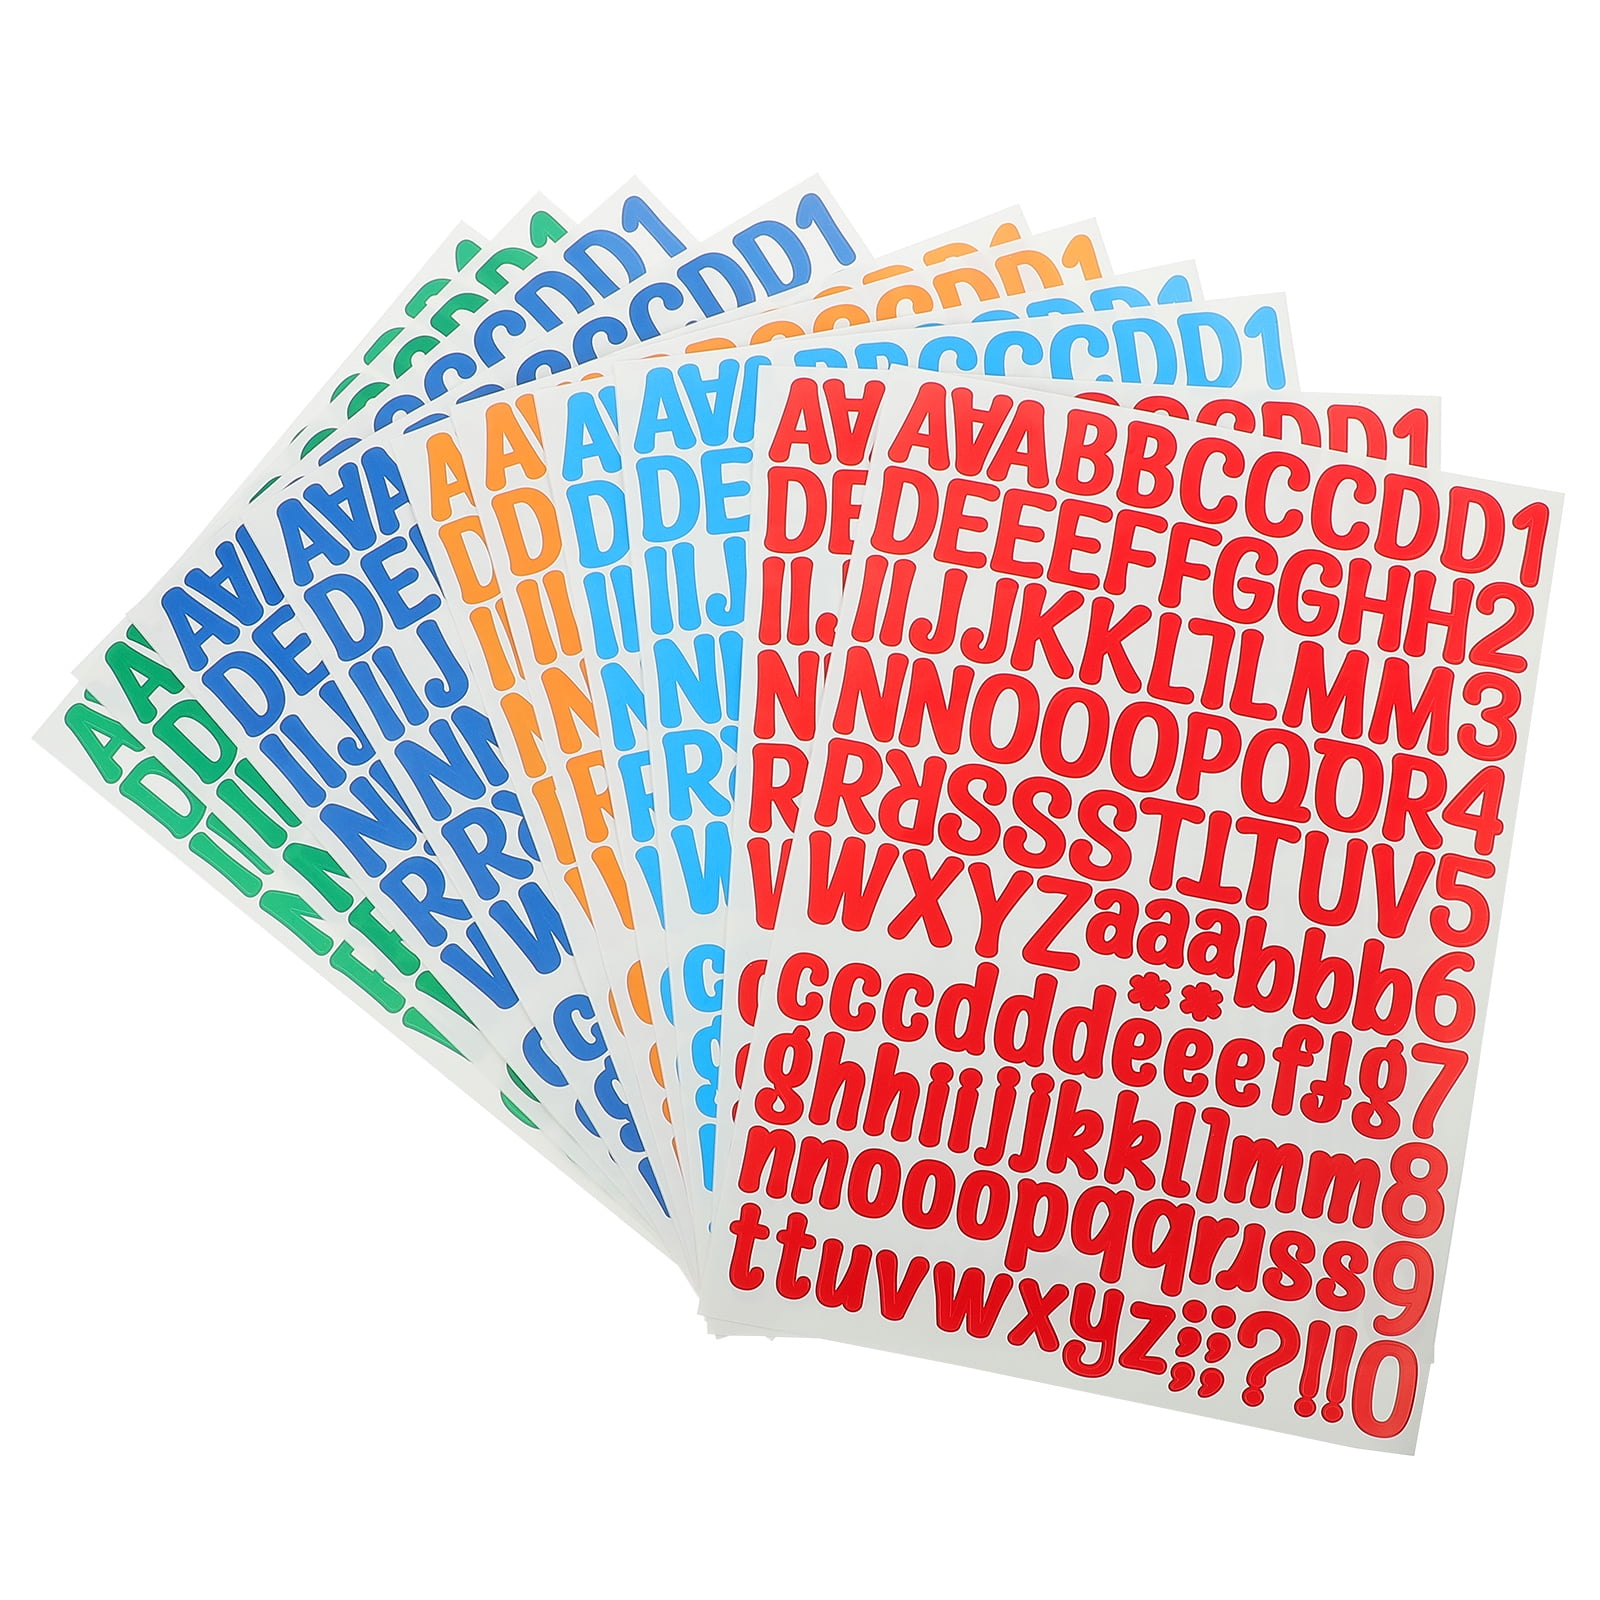 Sticko Gold Brush Alphabet Letter Stickers Teacher Supply Crafts Scrapbook